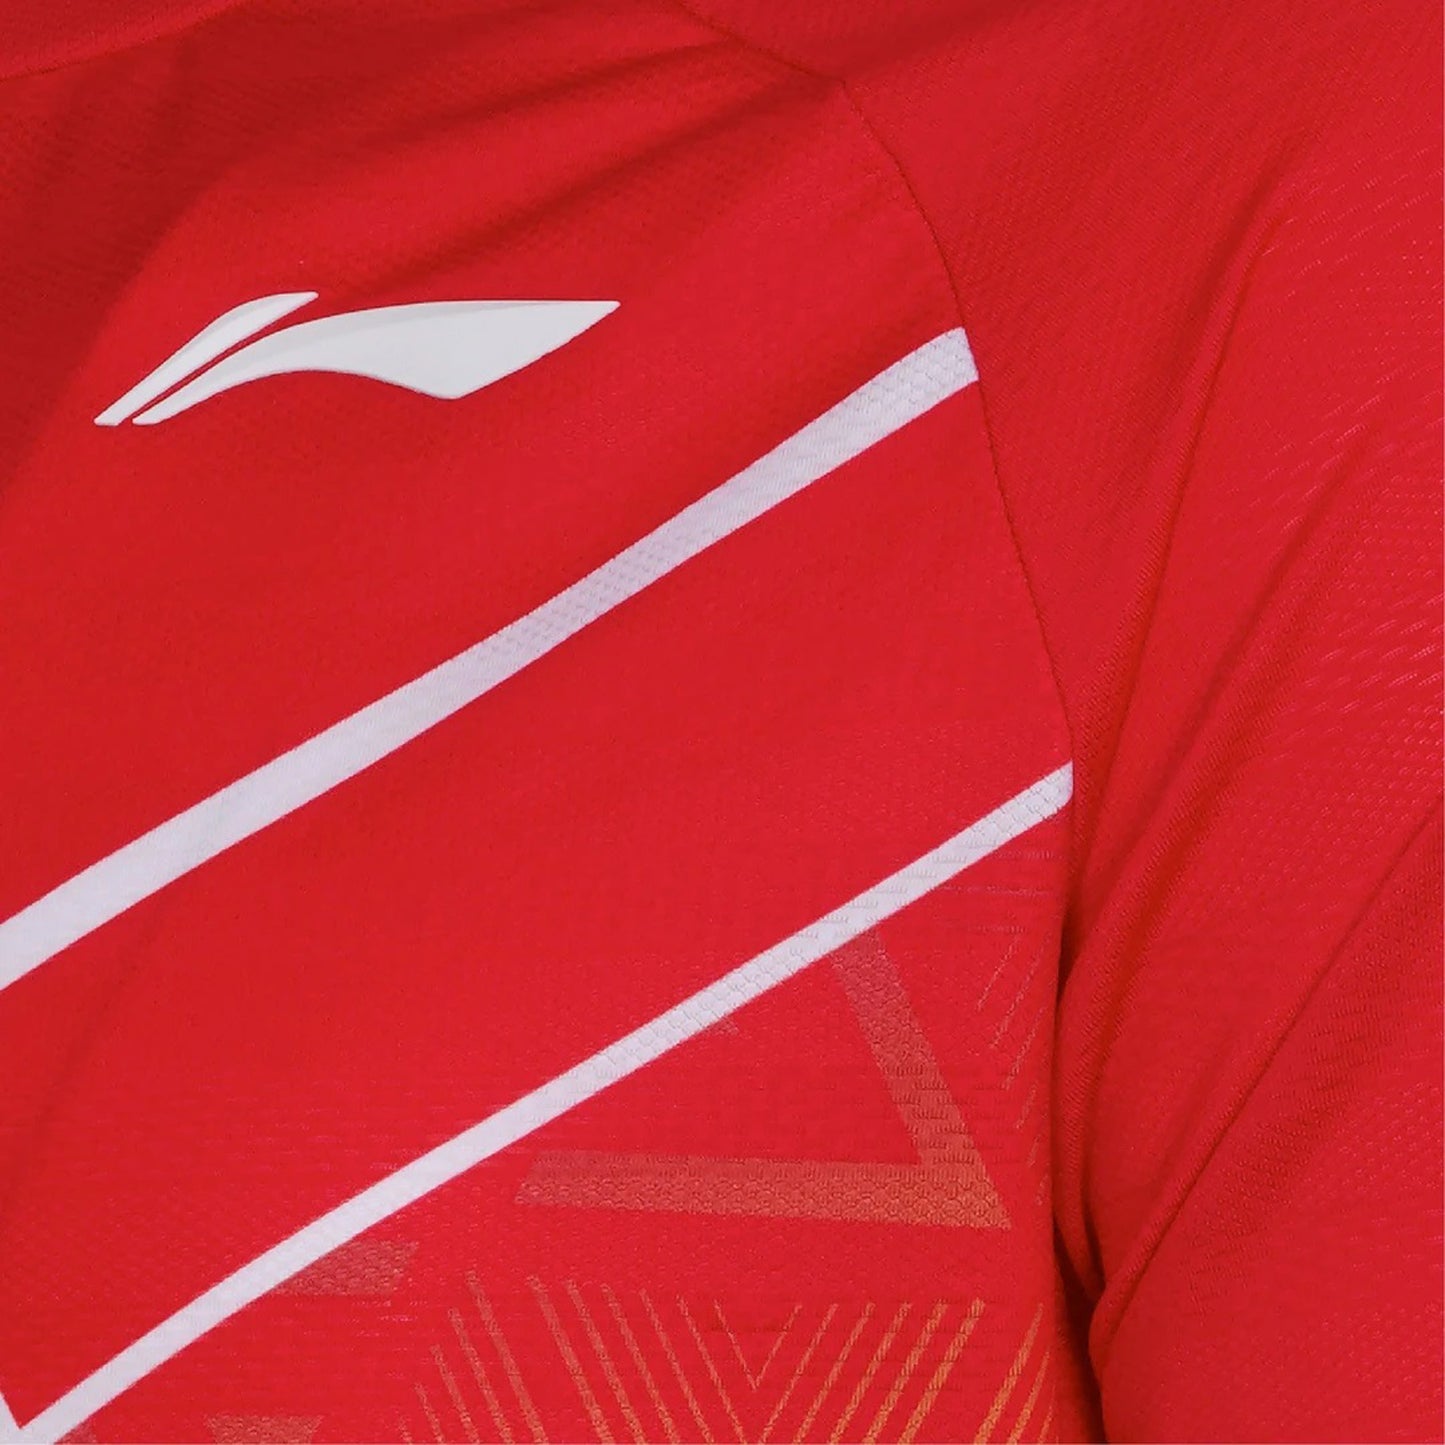 Li-Ning ATSSA01 Round Neck Badminton Tshirt, Red - Best Price online Prokicksports.com